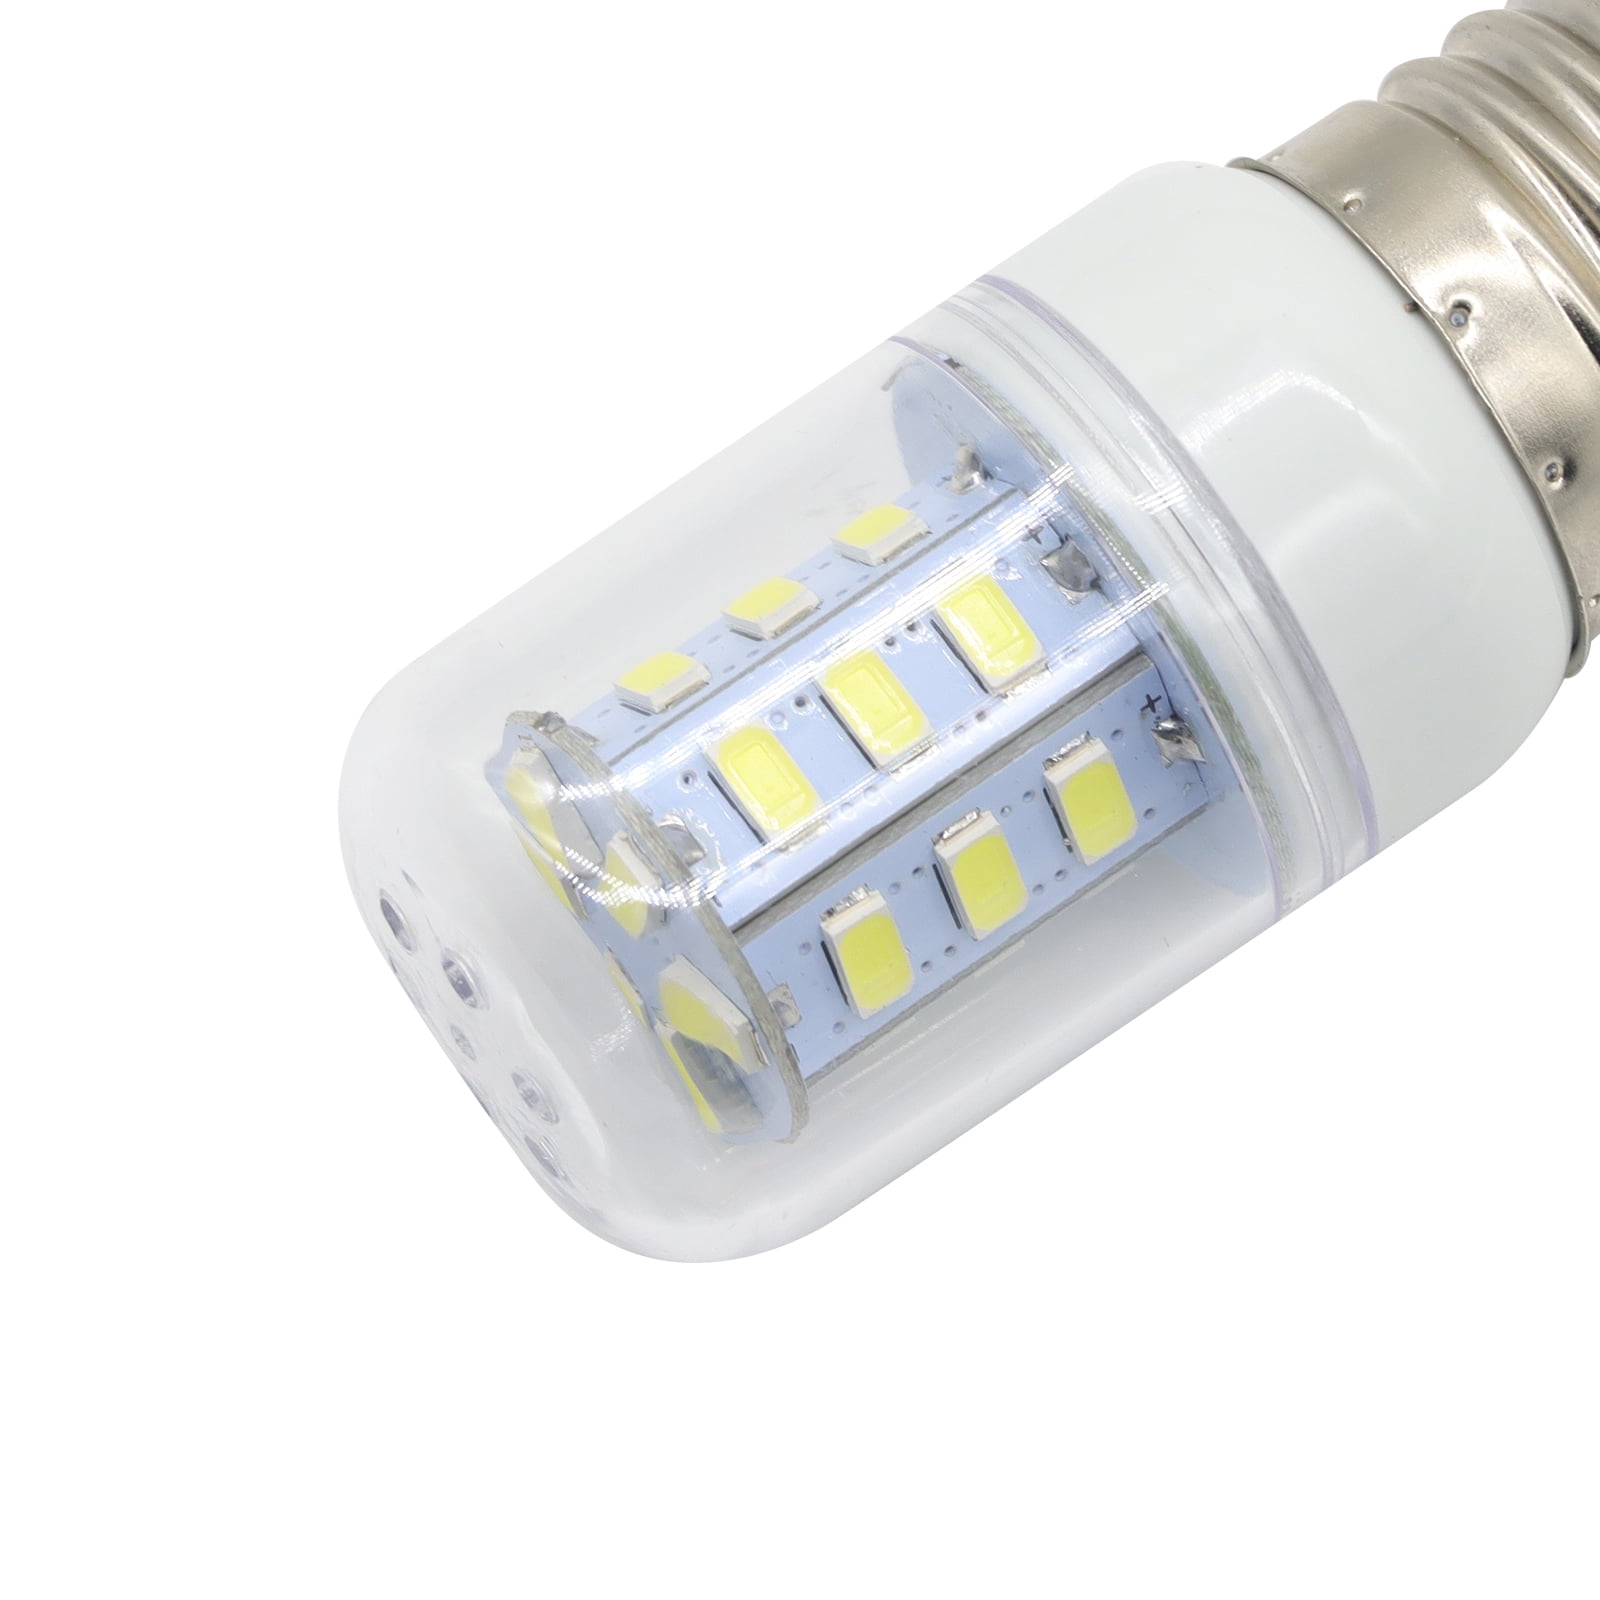 5304506303 - Frigidaire LED Light Bulb